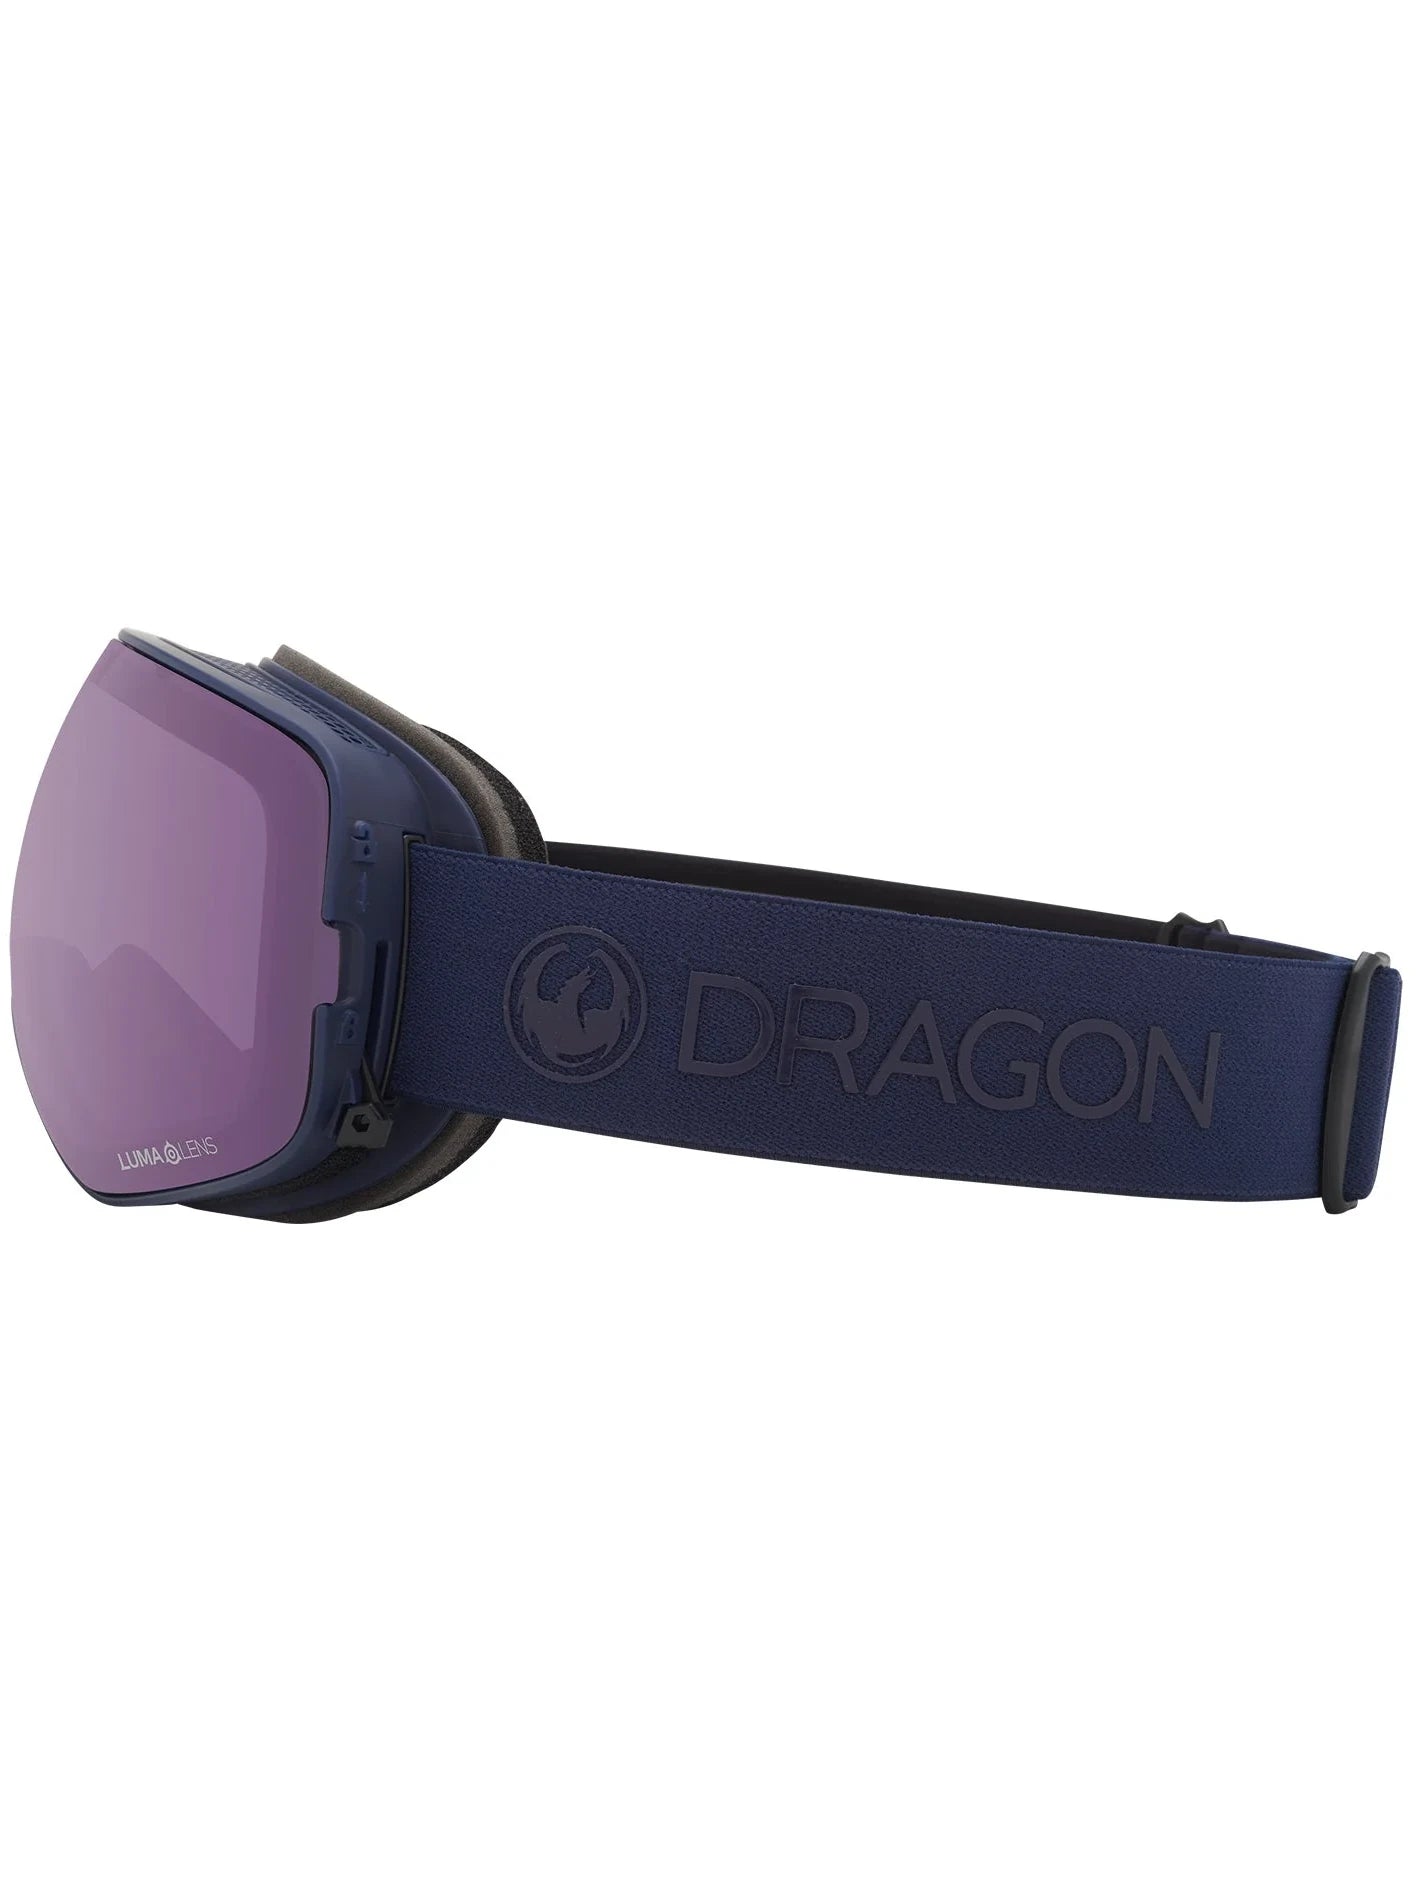 Dragon X2s - Shadow with Lumalens Violet & Lumalens Midnight Lens